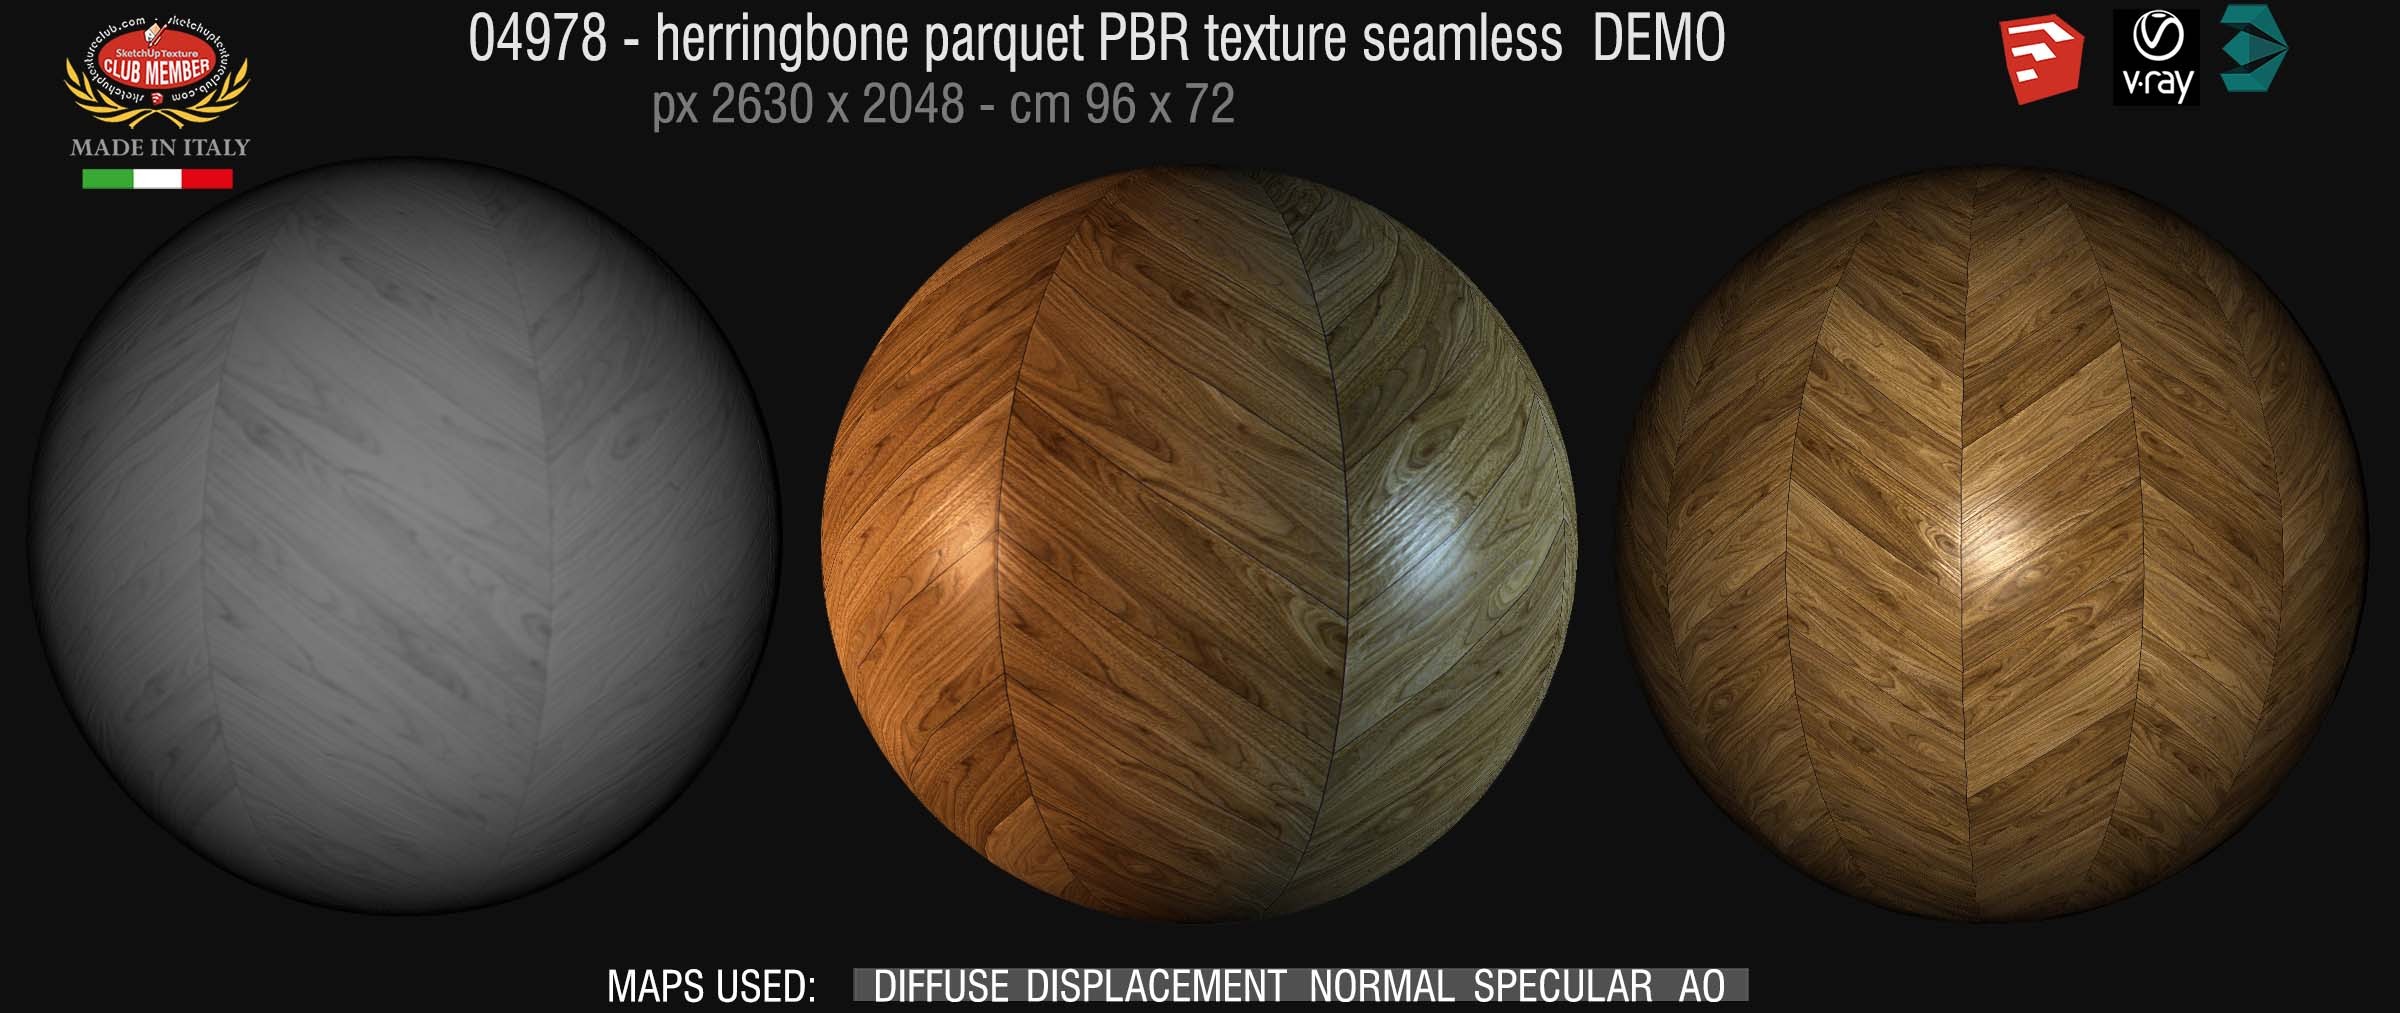 04977 Herringbone parquet PBR texture seamless DEMO